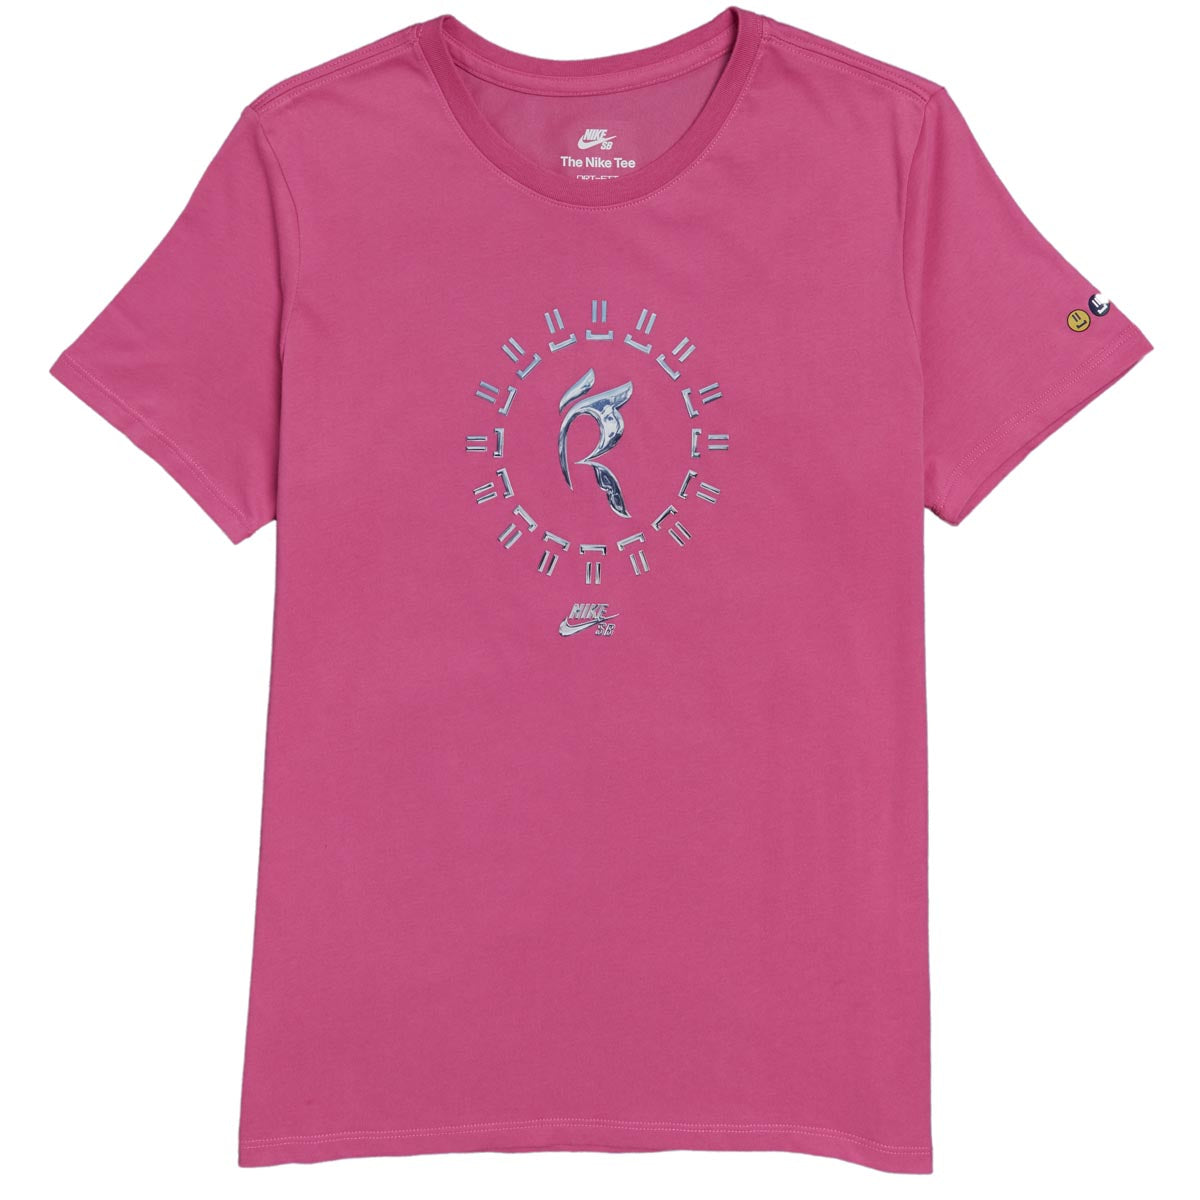 Nike SB Womens x Rayssa Leal Premium T-Shirt - Pinkfire II image 1